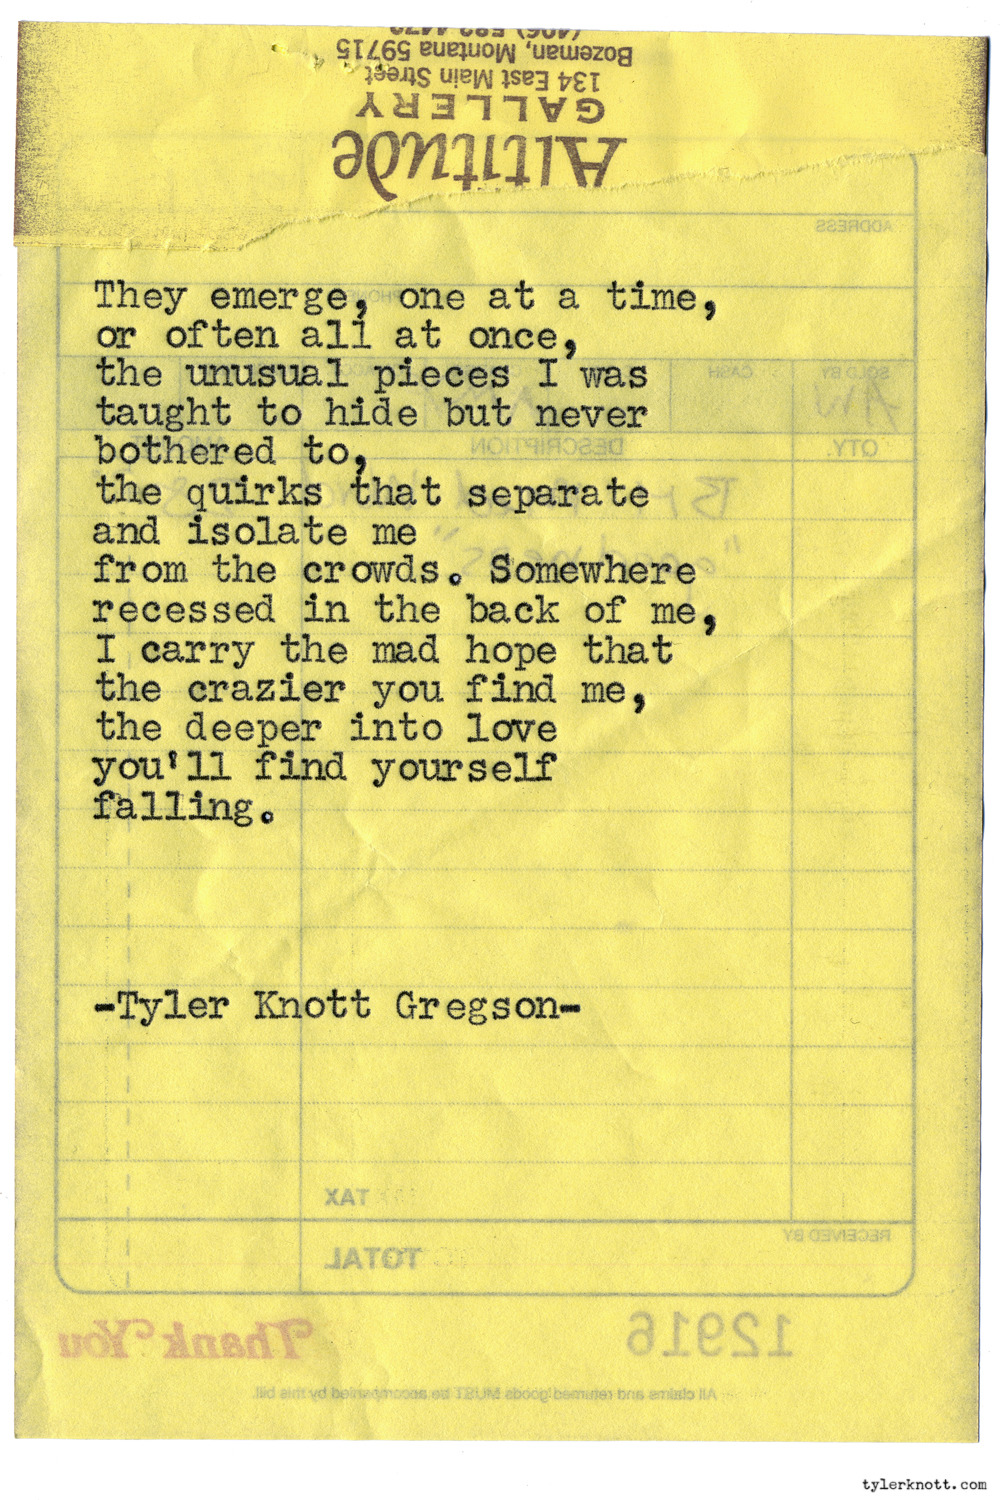 Tyler Knott Gregson — Typewriter Series #1293 by Tyler Knott Gregson...